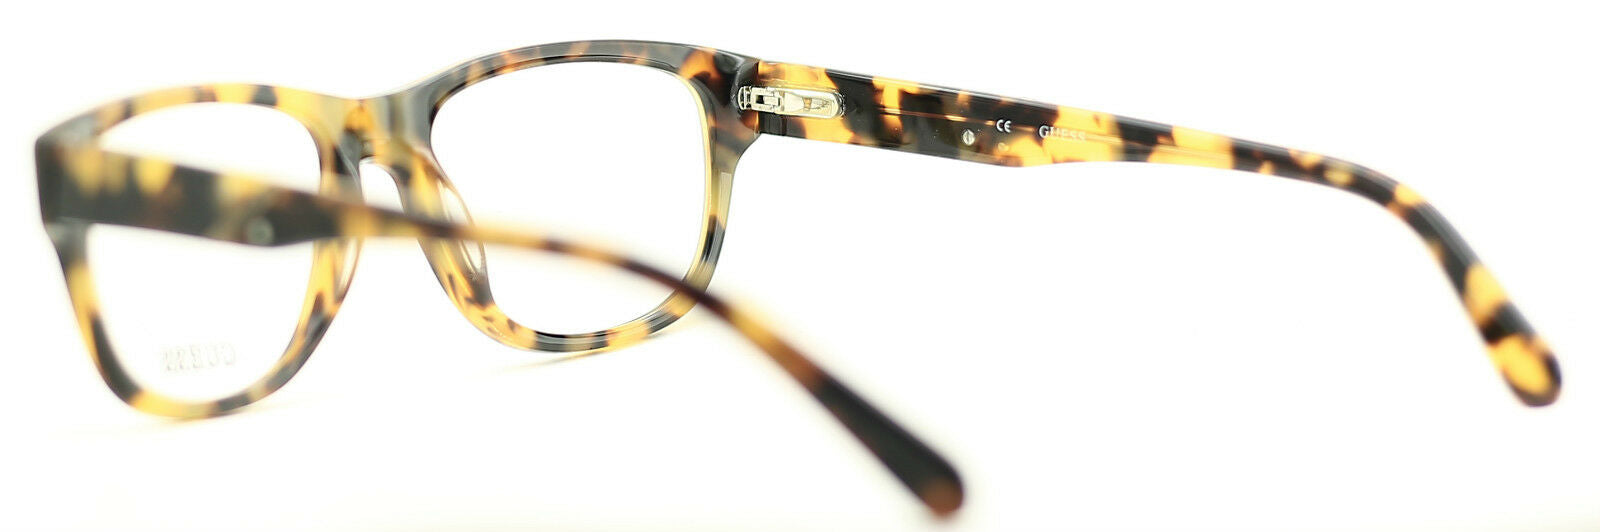 GUESS GU1782 TO Eyewear FRAMES Glasses Eyeglasses RX Optical BNIB New - TRUSTED